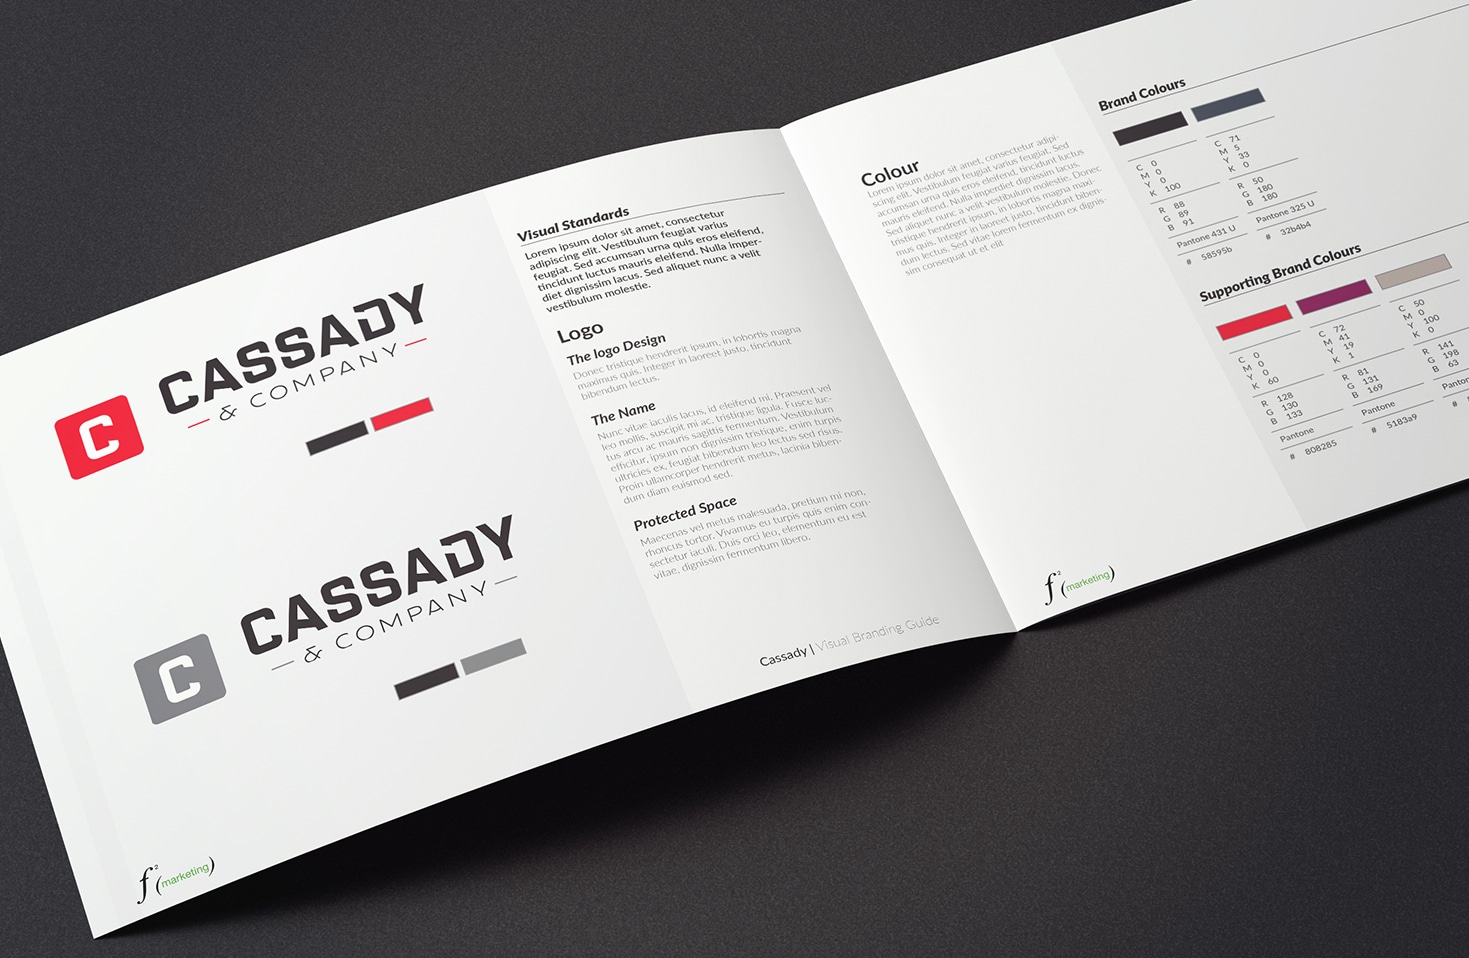 Cassady visual branding guide